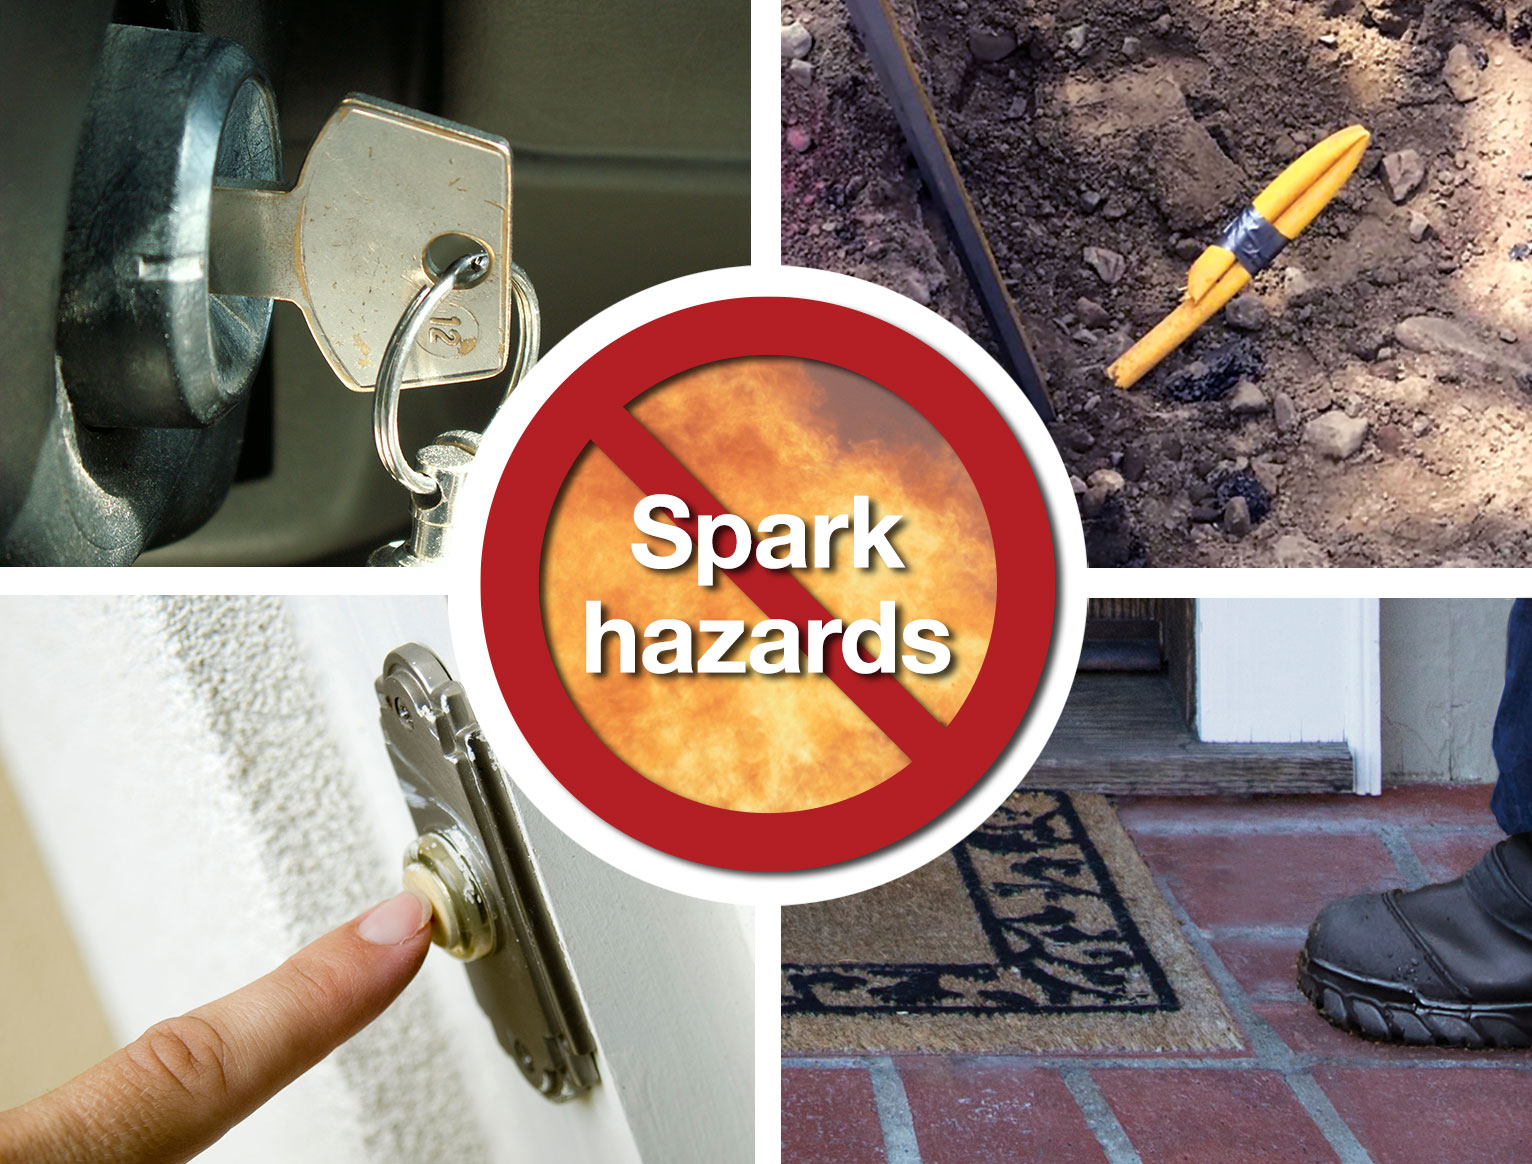 Examples of spark hazards